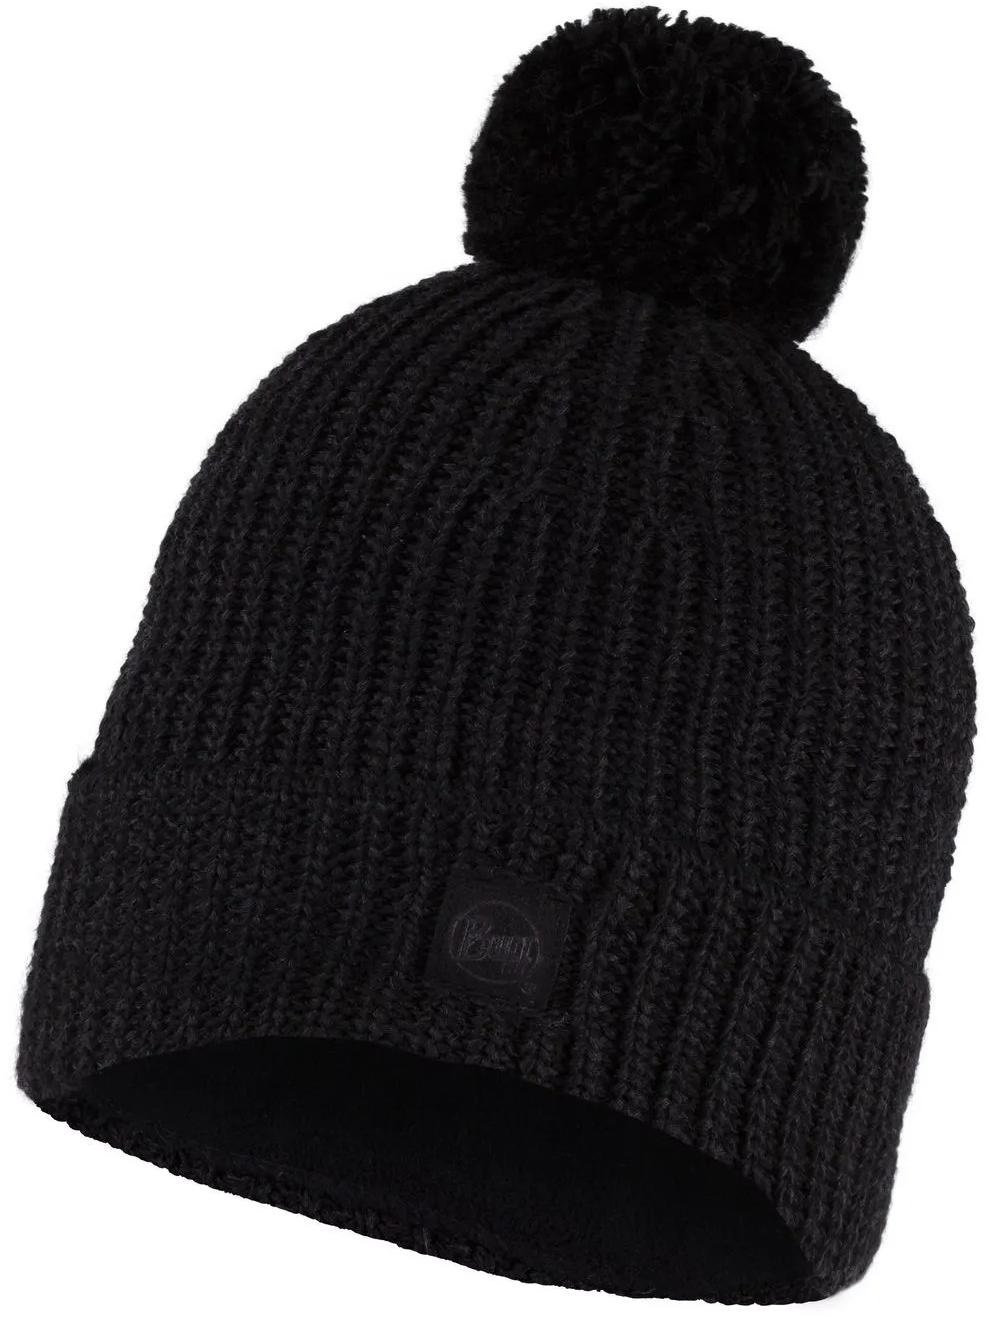 Шапка Buff Knitted & Fleece Band Hat Vaed Black, US:one size, 129619.999.10.00 шапка buff knitted hat elon maroon us one size 126464 632 10 00